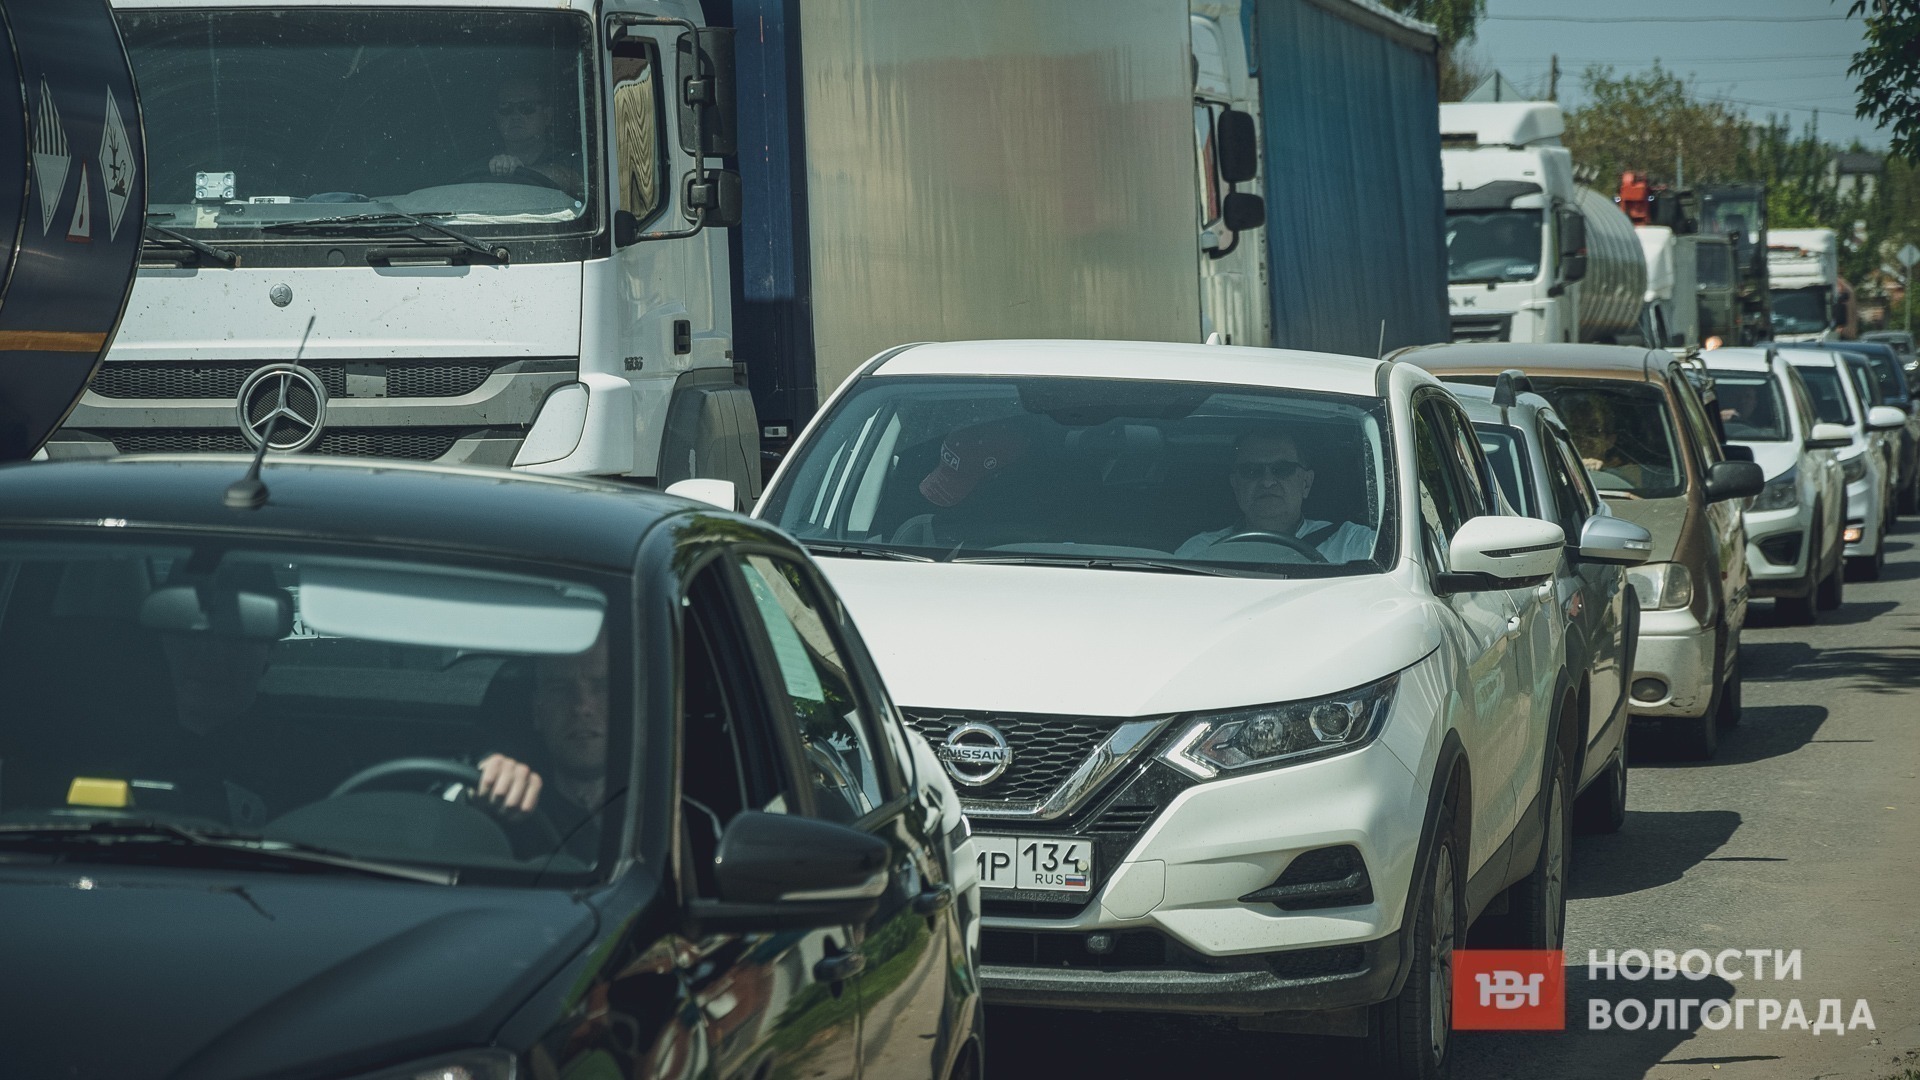 Пробки из-за ДТП затруднили движение в Волгограде